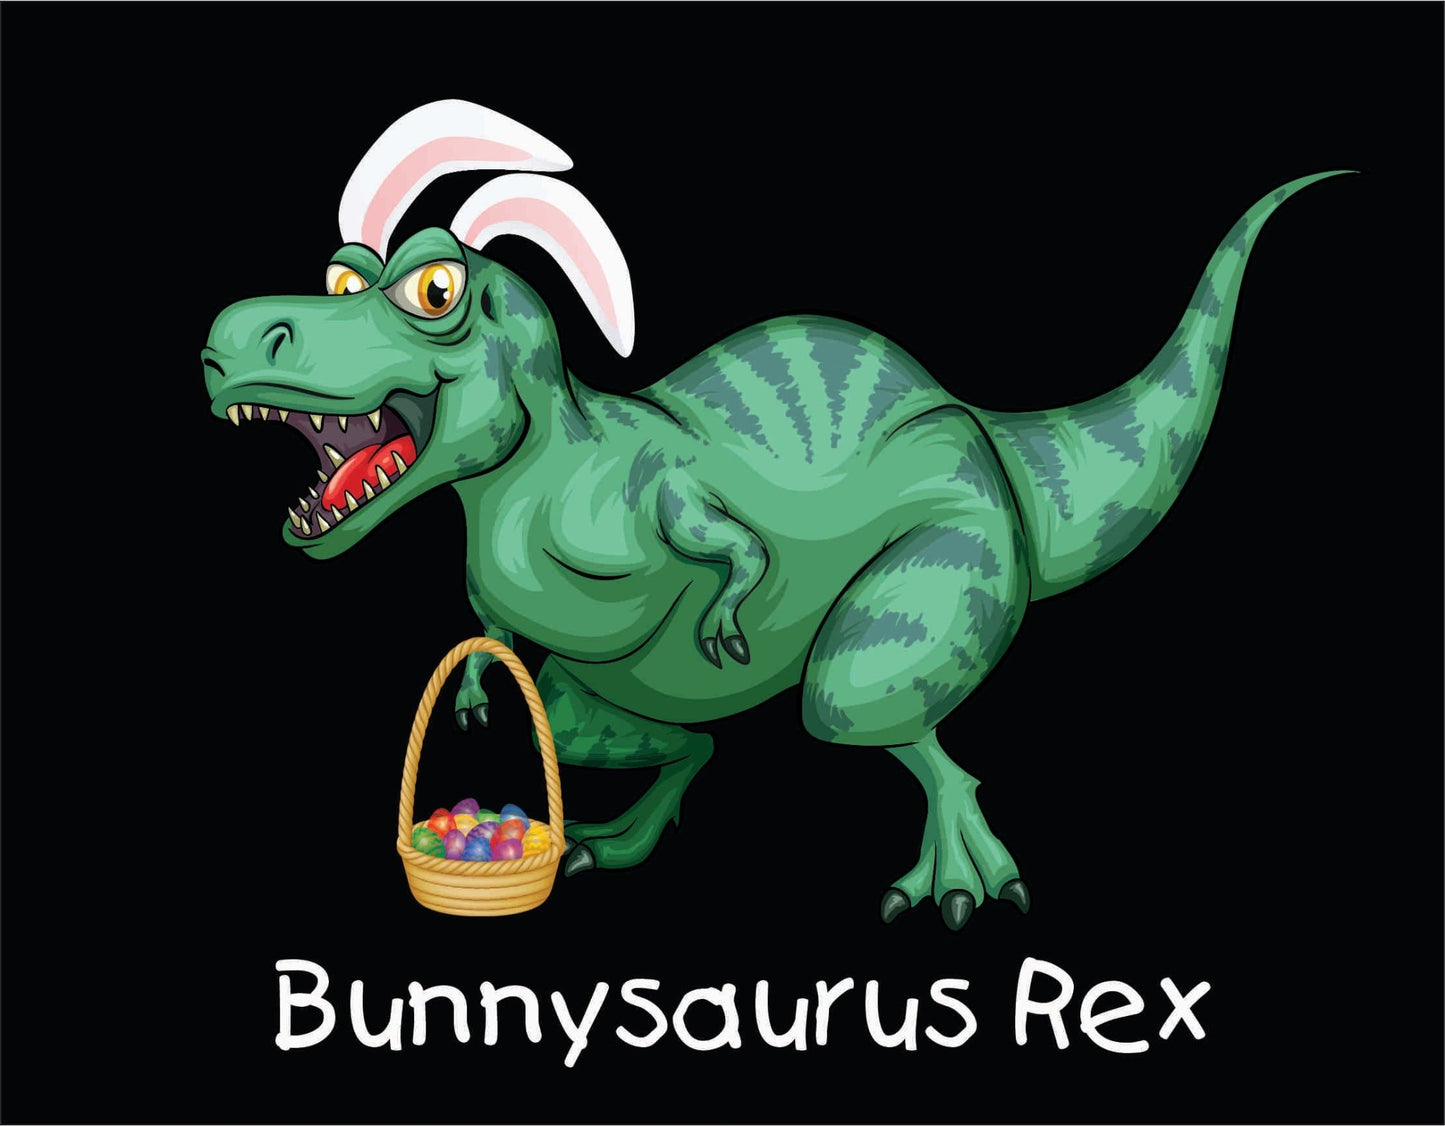 Bunnysaurus Rex T Shirt (Infant, Toddler, or Youth) - SBS T Shop